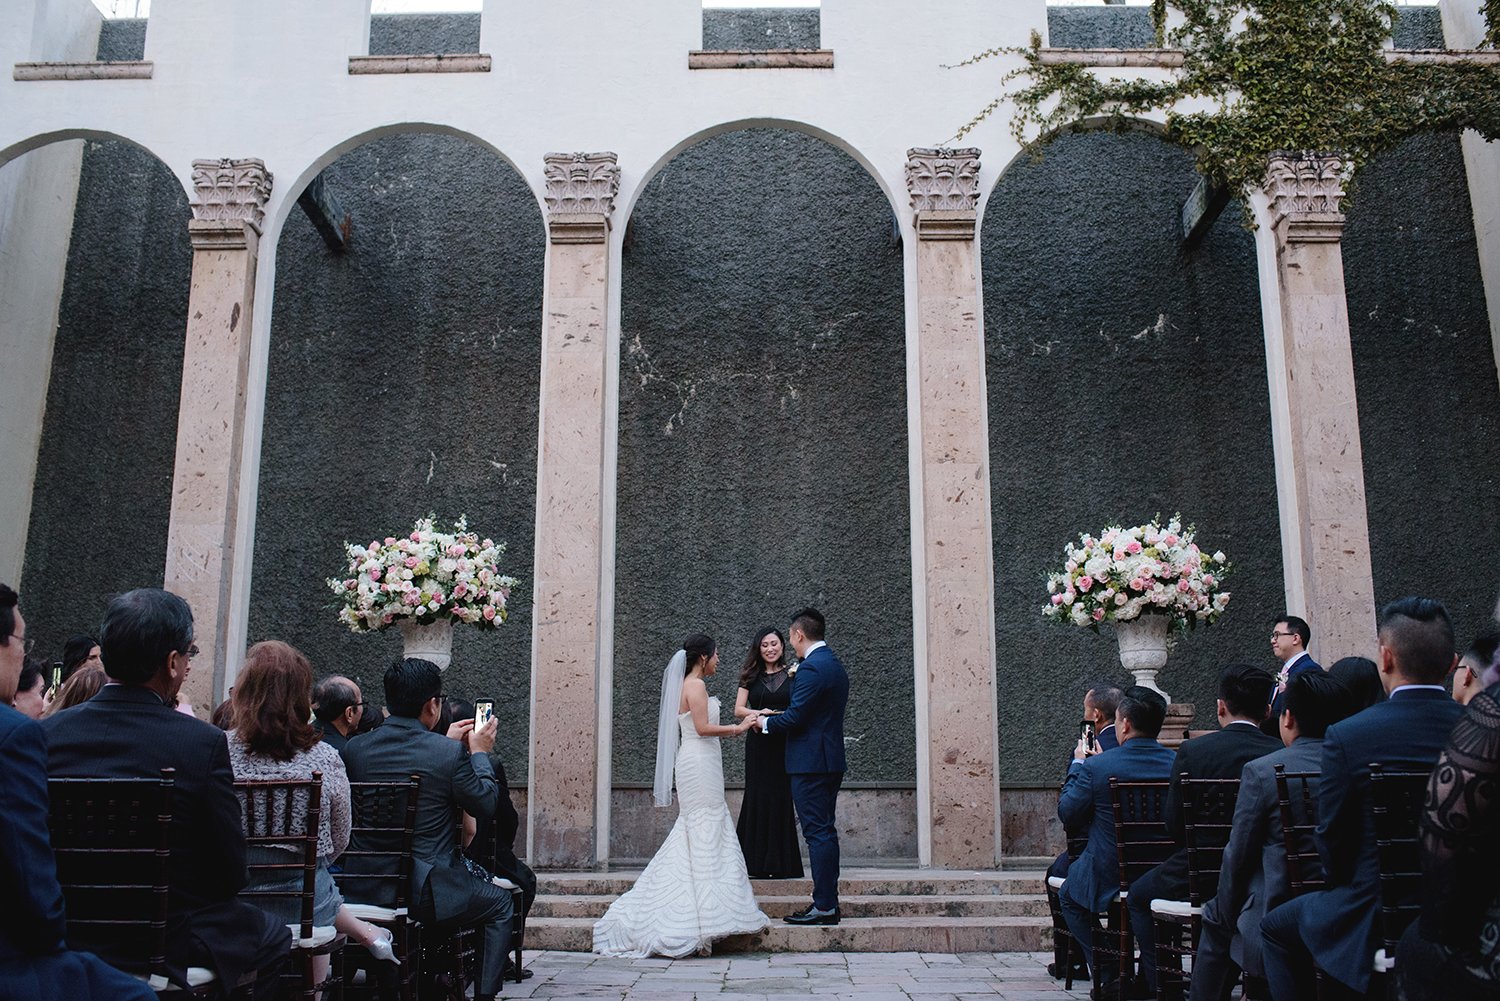 water wall - houston wedding ceremony backdrop